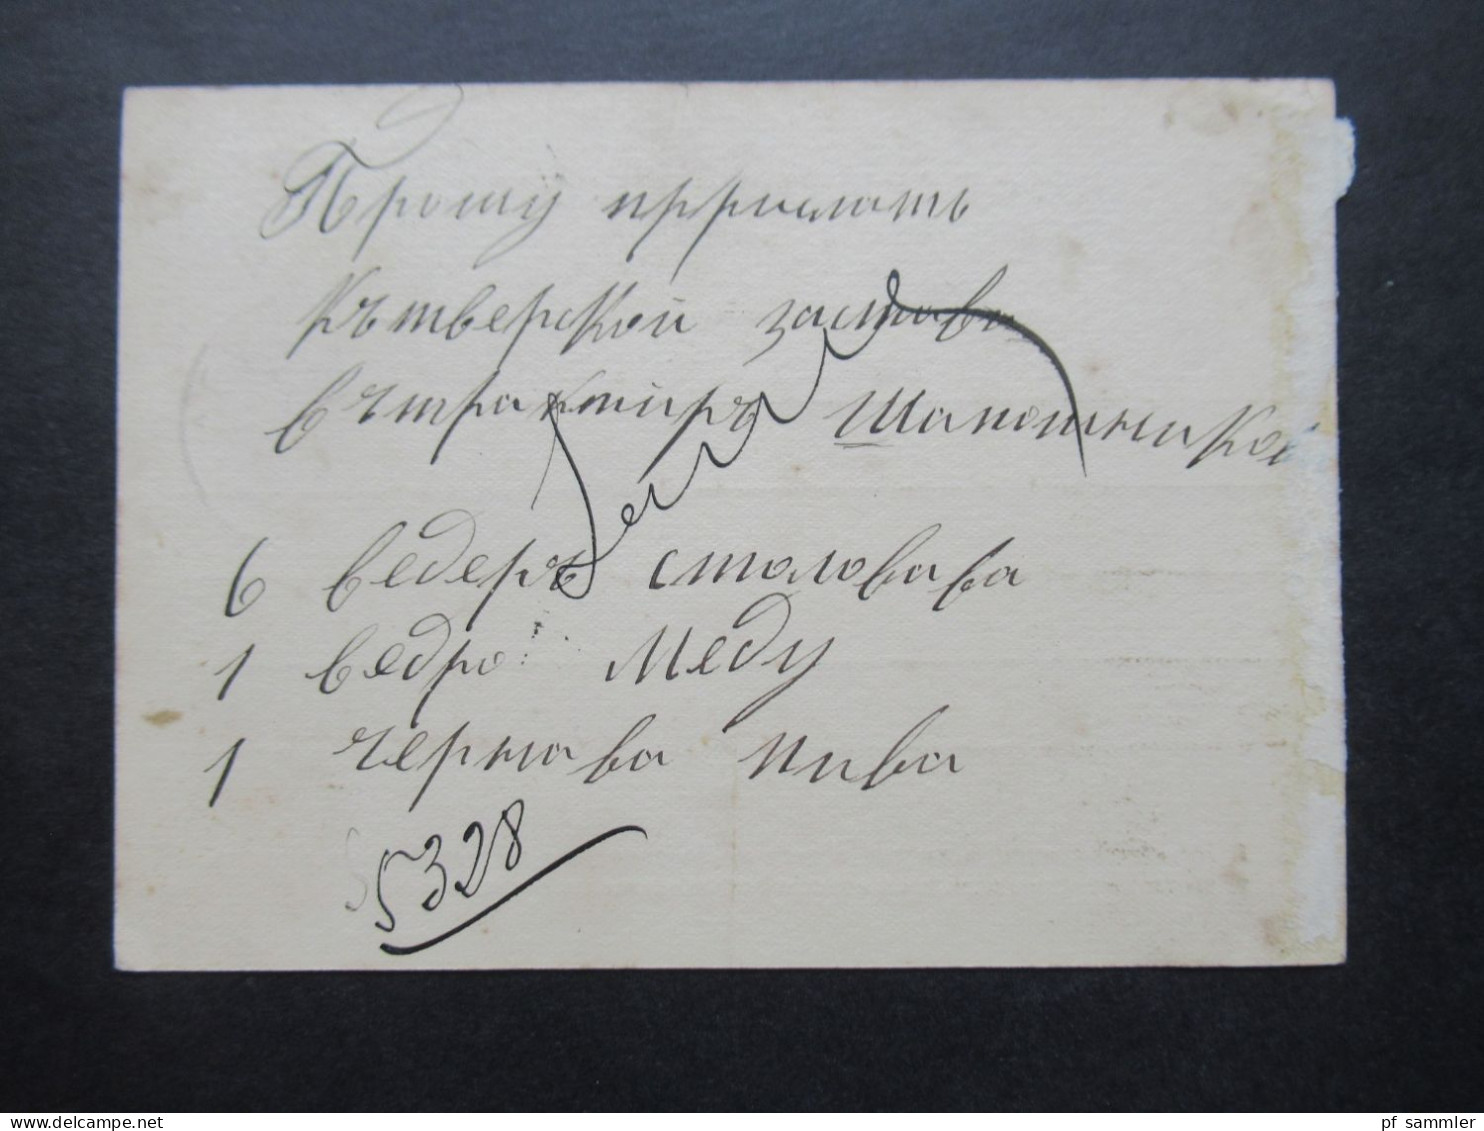 Russland 1882 Ganzsache Mit Stempel Mockba / Moskau / Stempel Mit Posthorn - Stamped Stationery